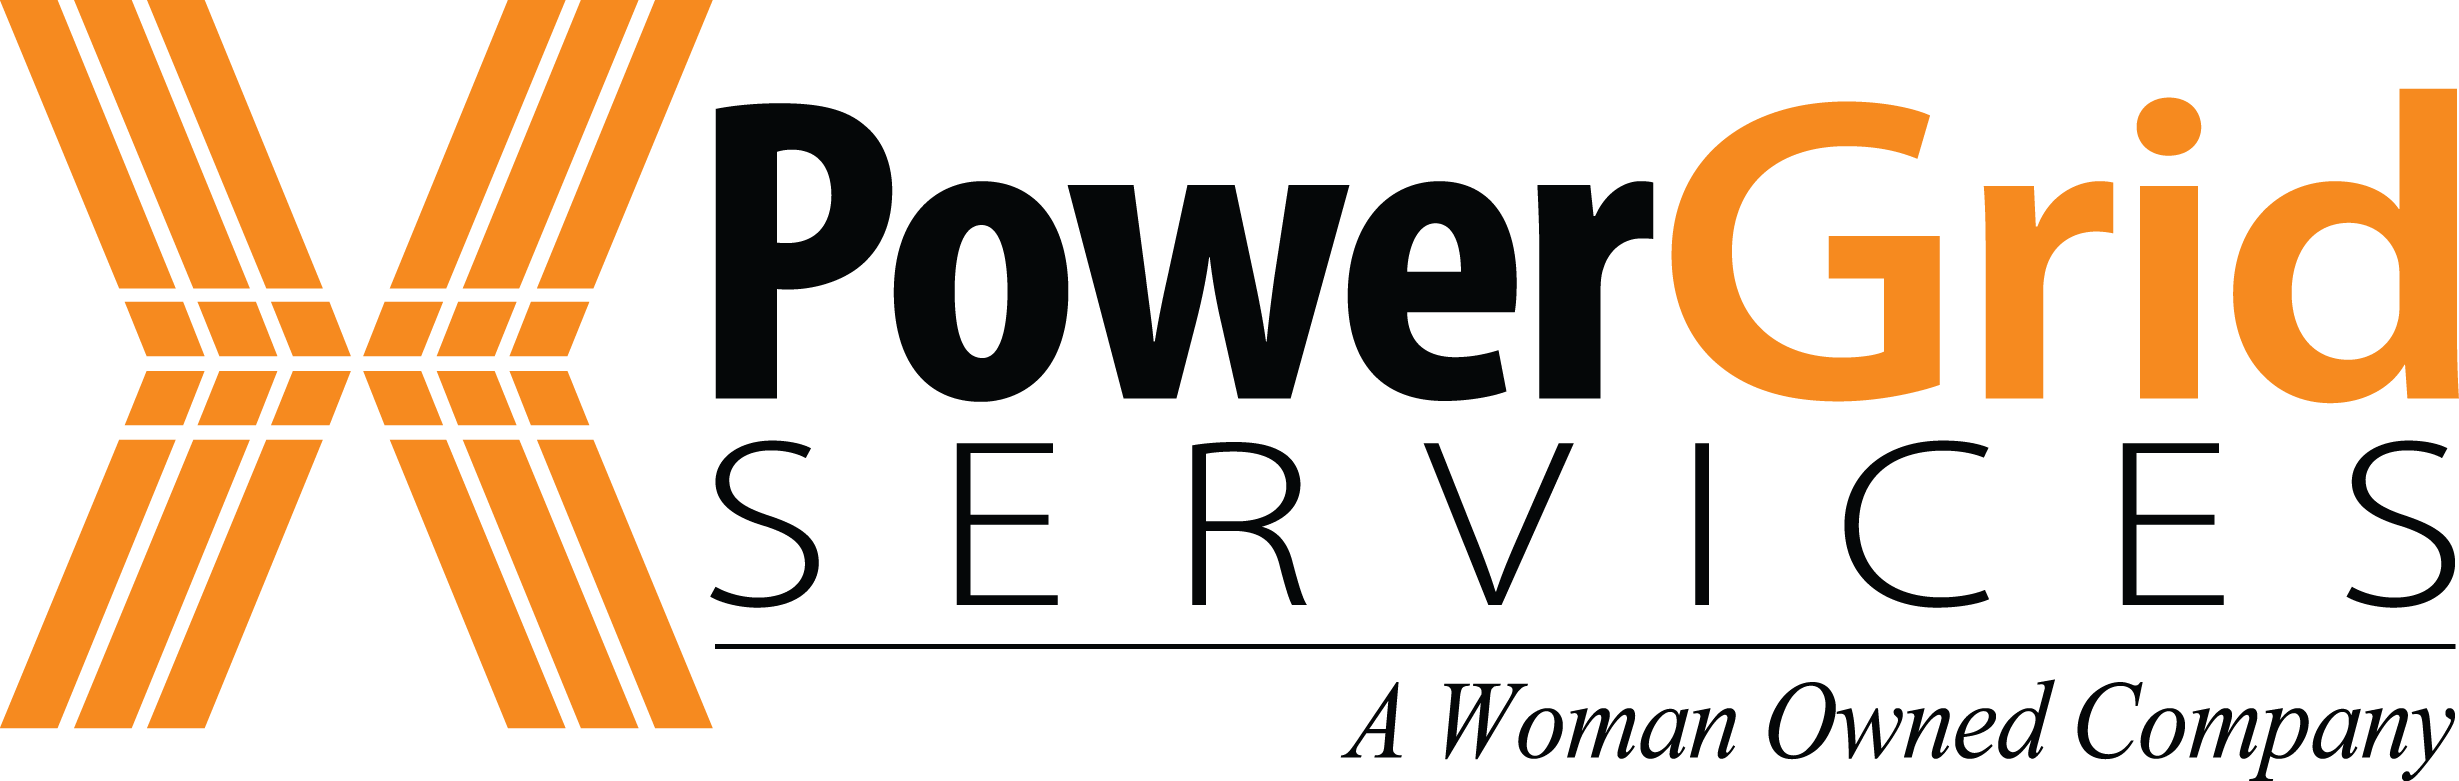 Powergrid Services